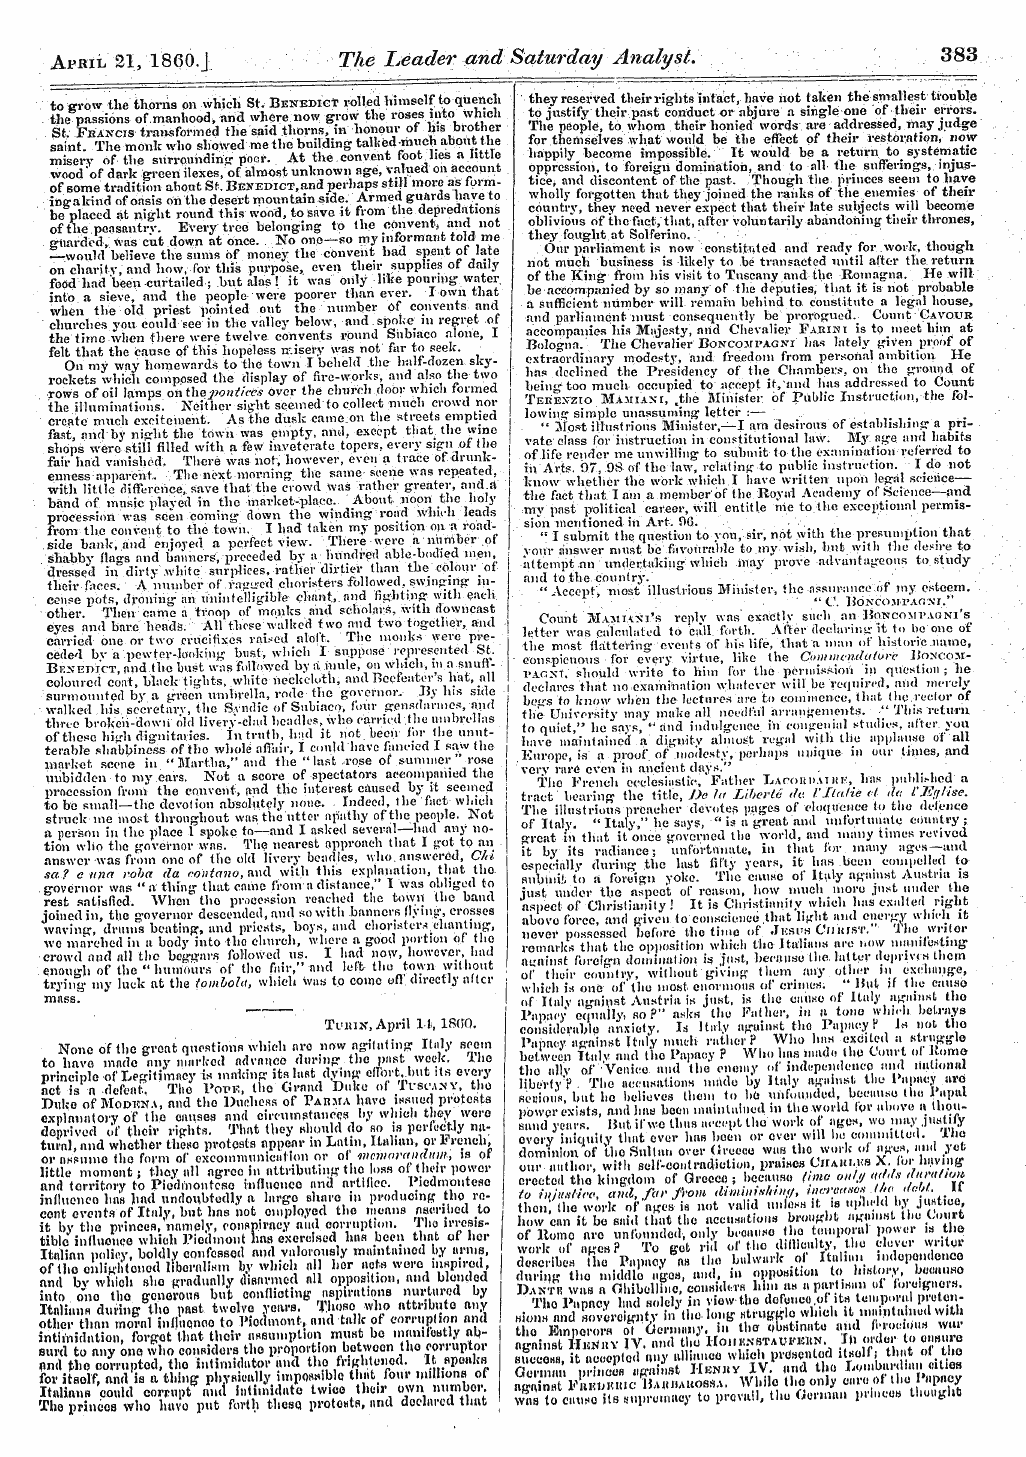 Leader (1850-1860): jS F Y, 2nd edition - April 21, 1860.J The Leader, And Saturda...